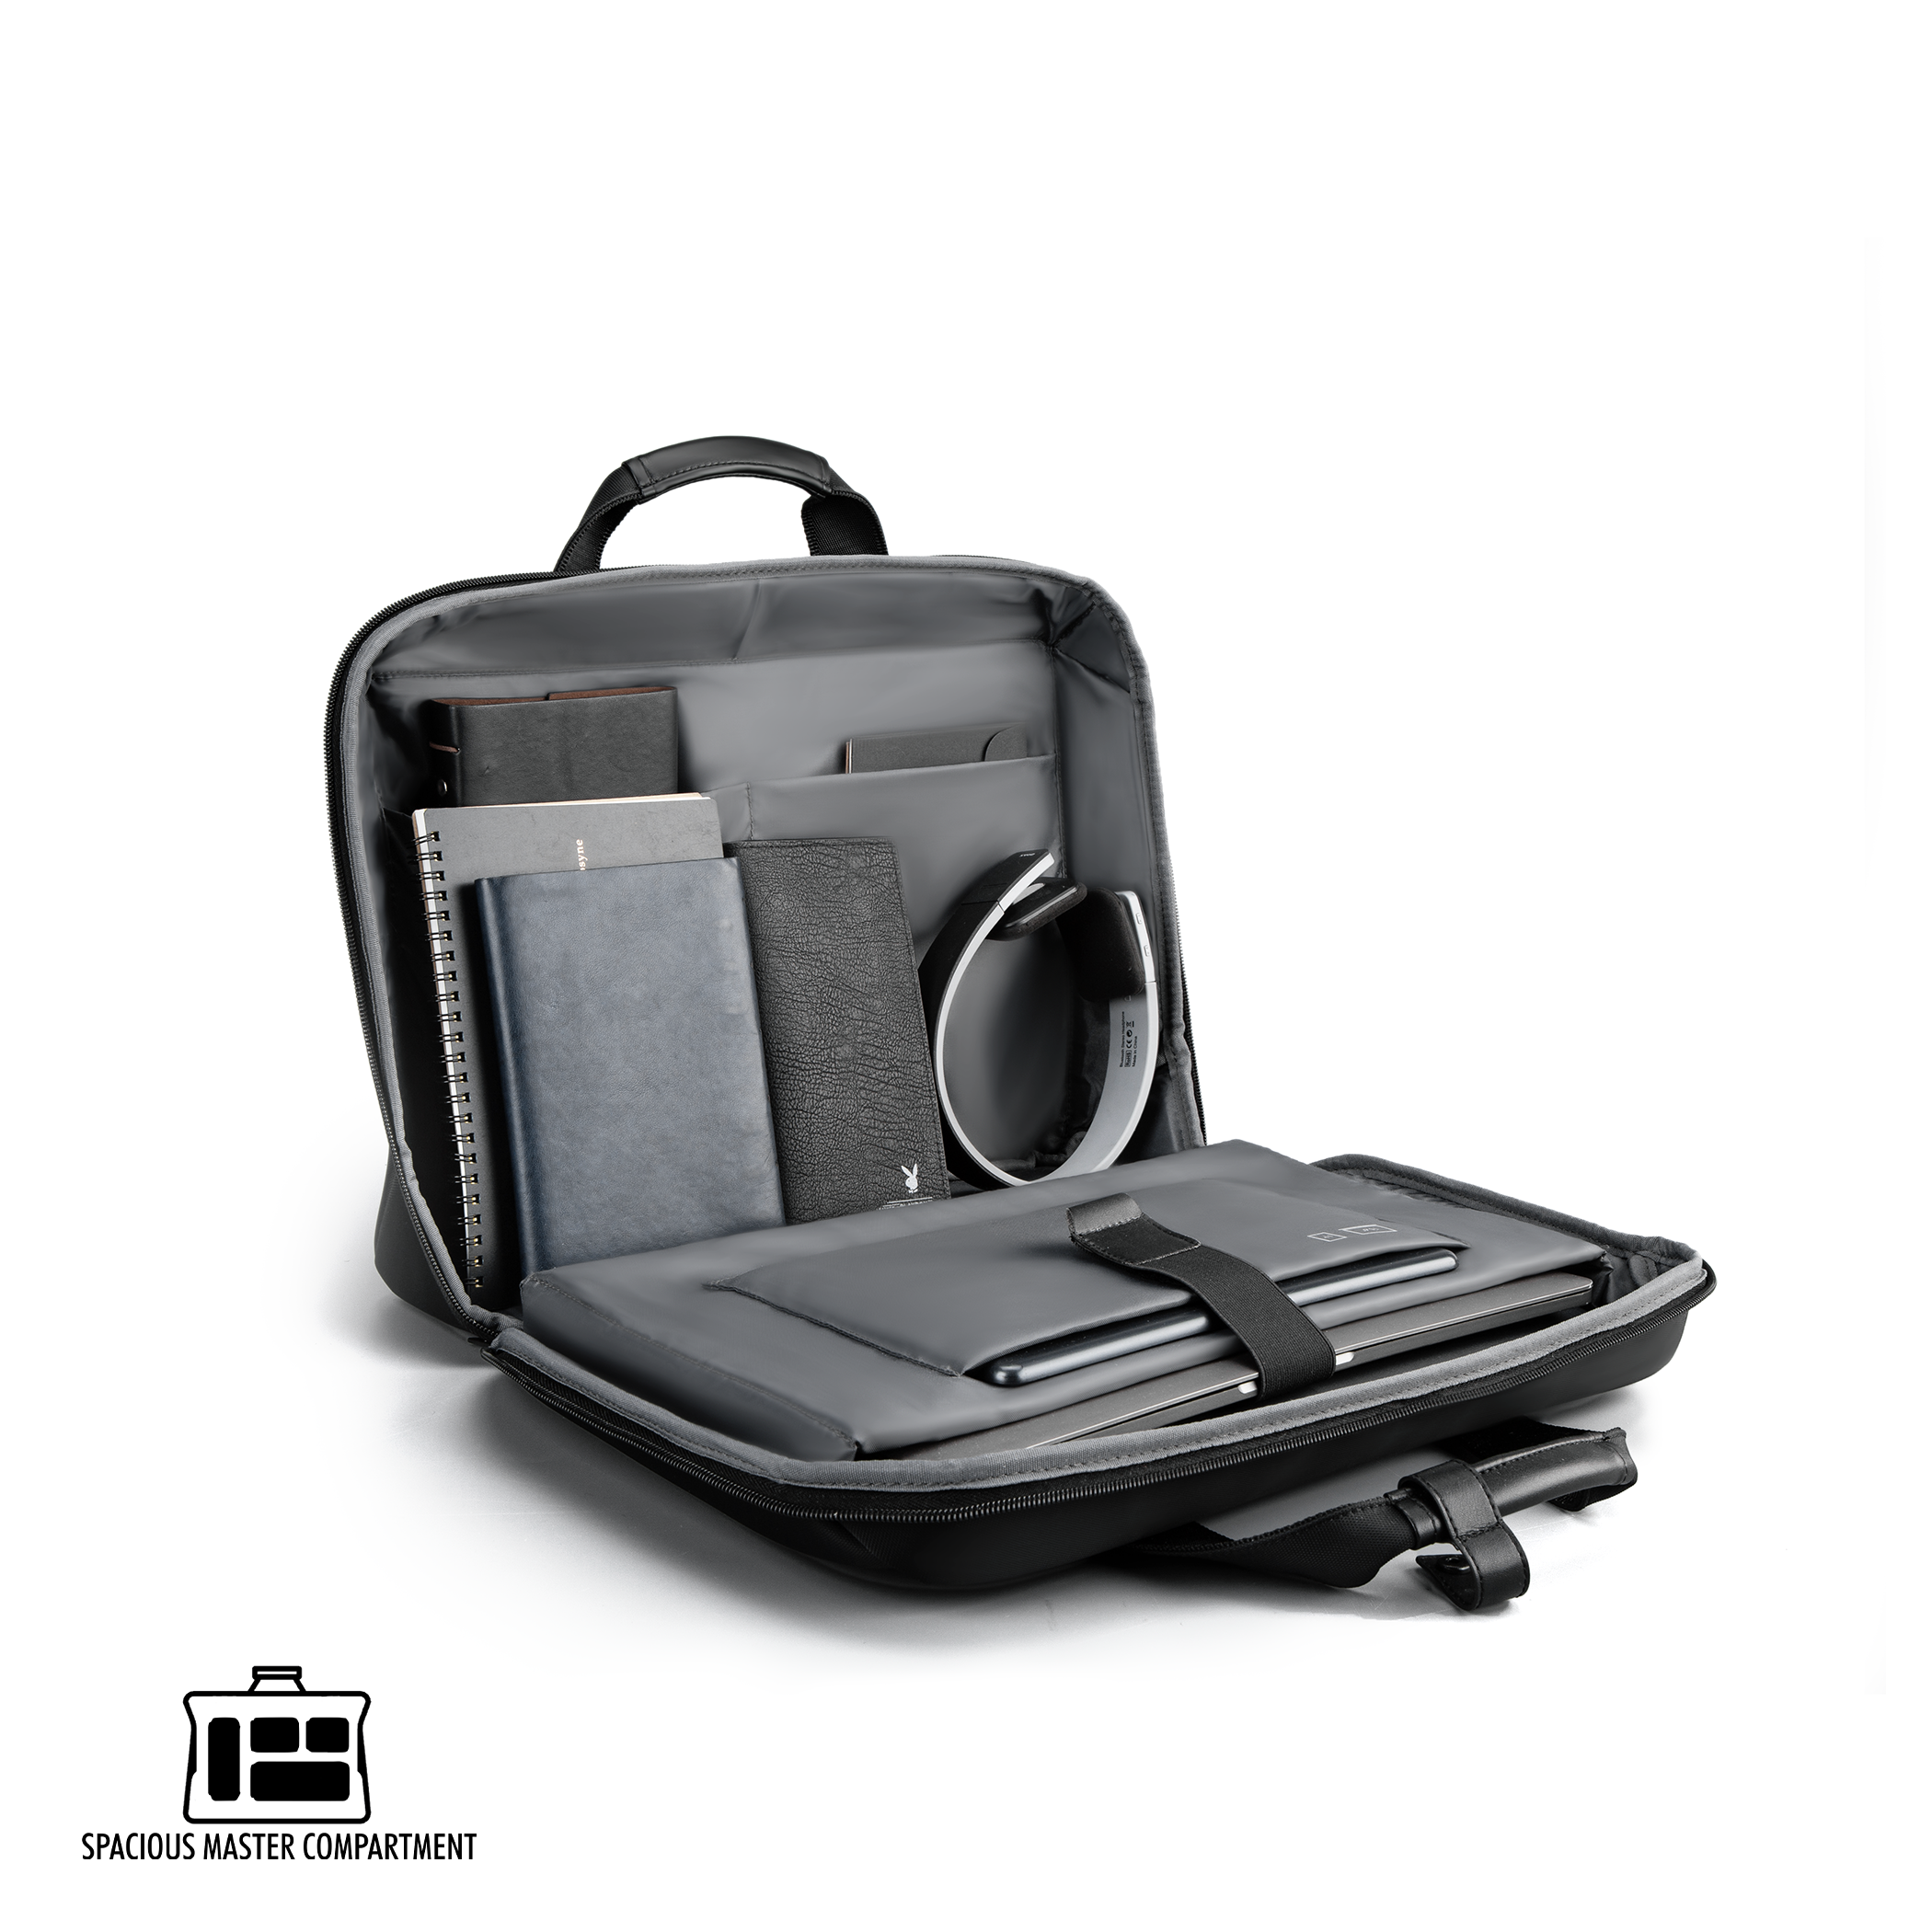 ZenPack LITE (Kyoto Black) Laptop Messenger Bag X Briefcase with USB Fast-Charging